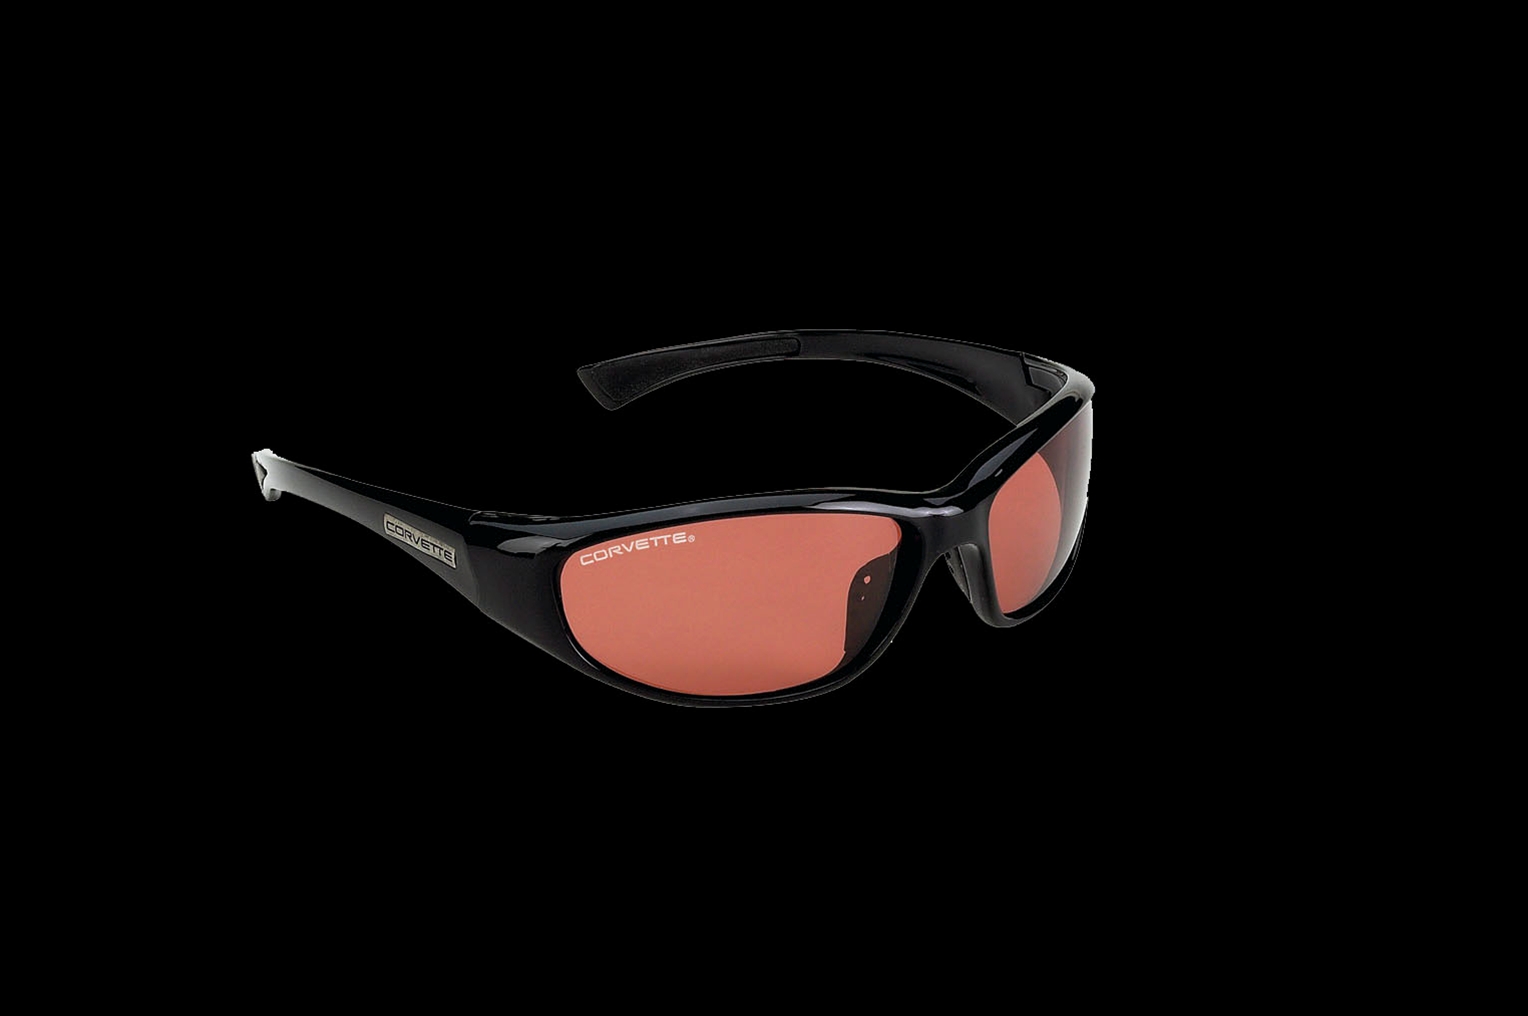 Corvette Series Sun Glasses Polarized Lens Gloss Black with Drivers Lens